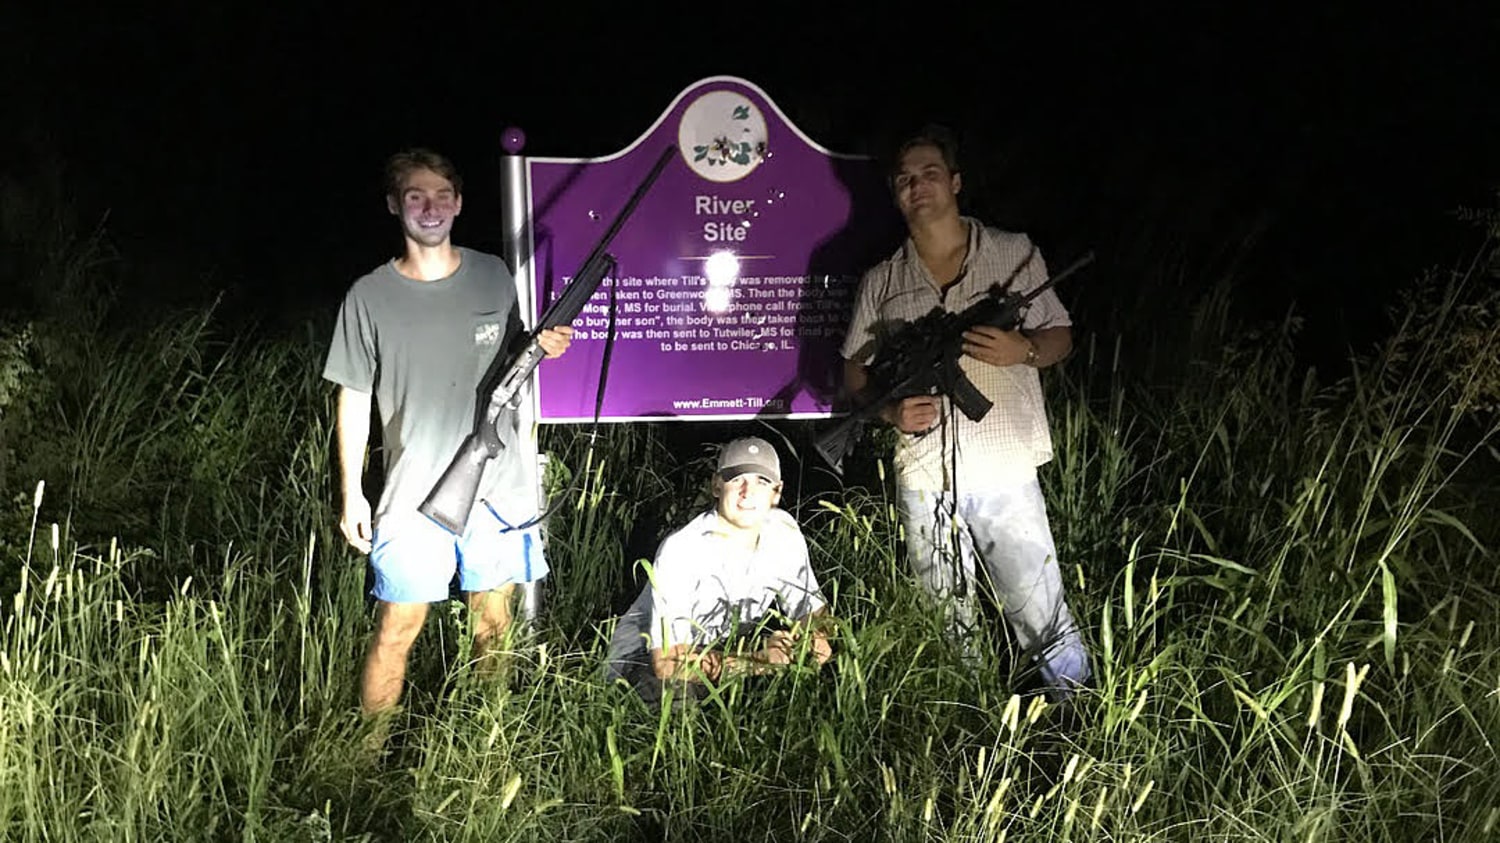 Till memorial in photo of gun-toting Mississippi will made bulletproof